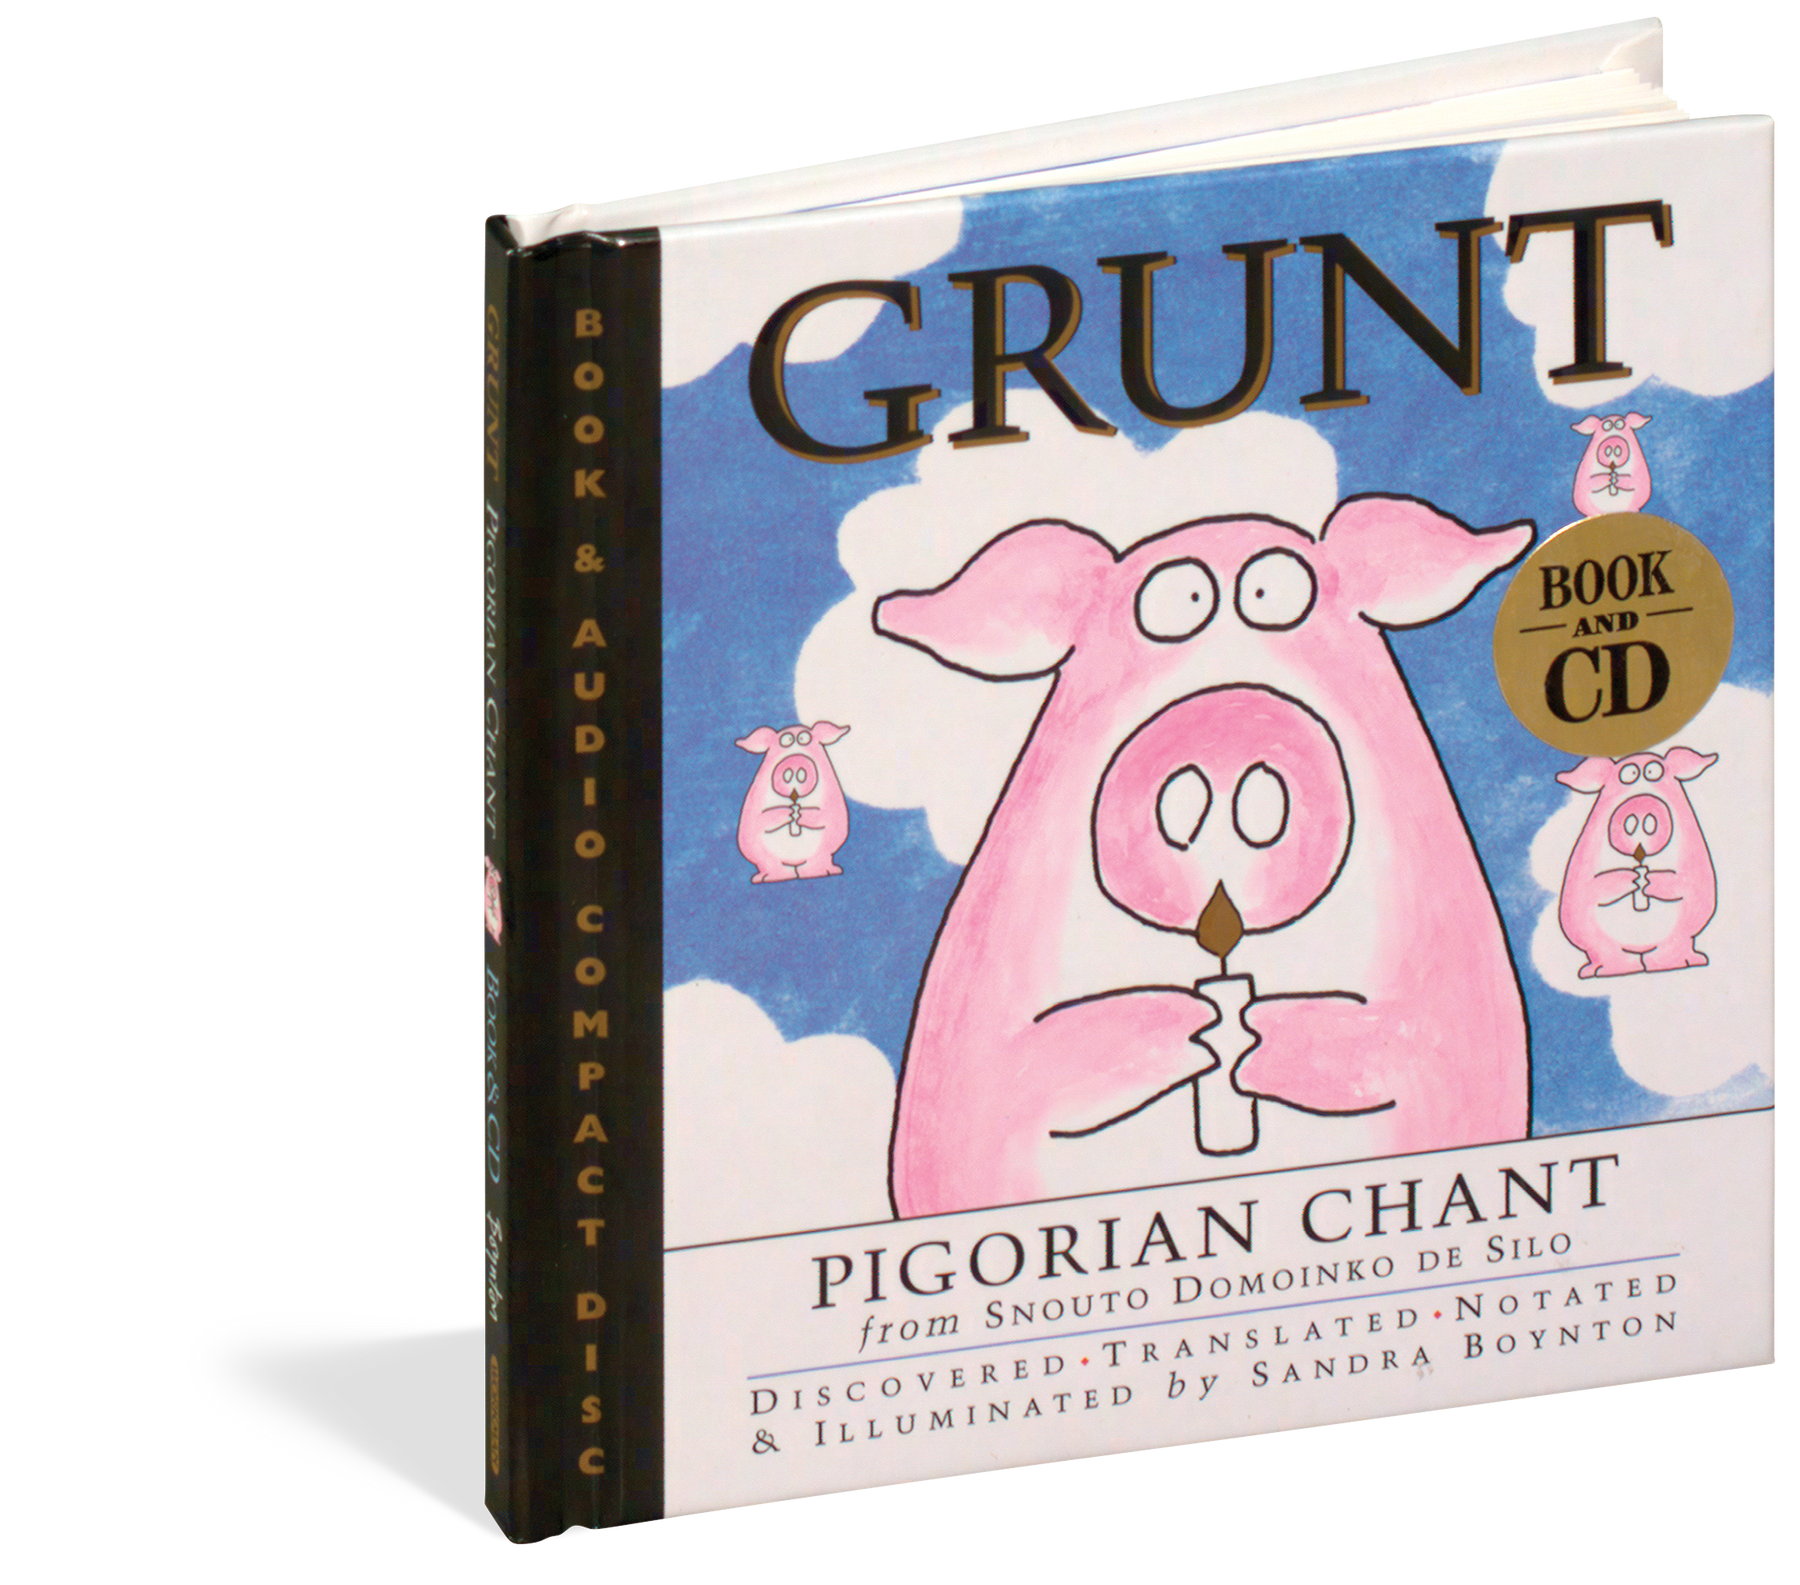 Grunt: Pigorian Chant from Snouto Domoinko de Silo